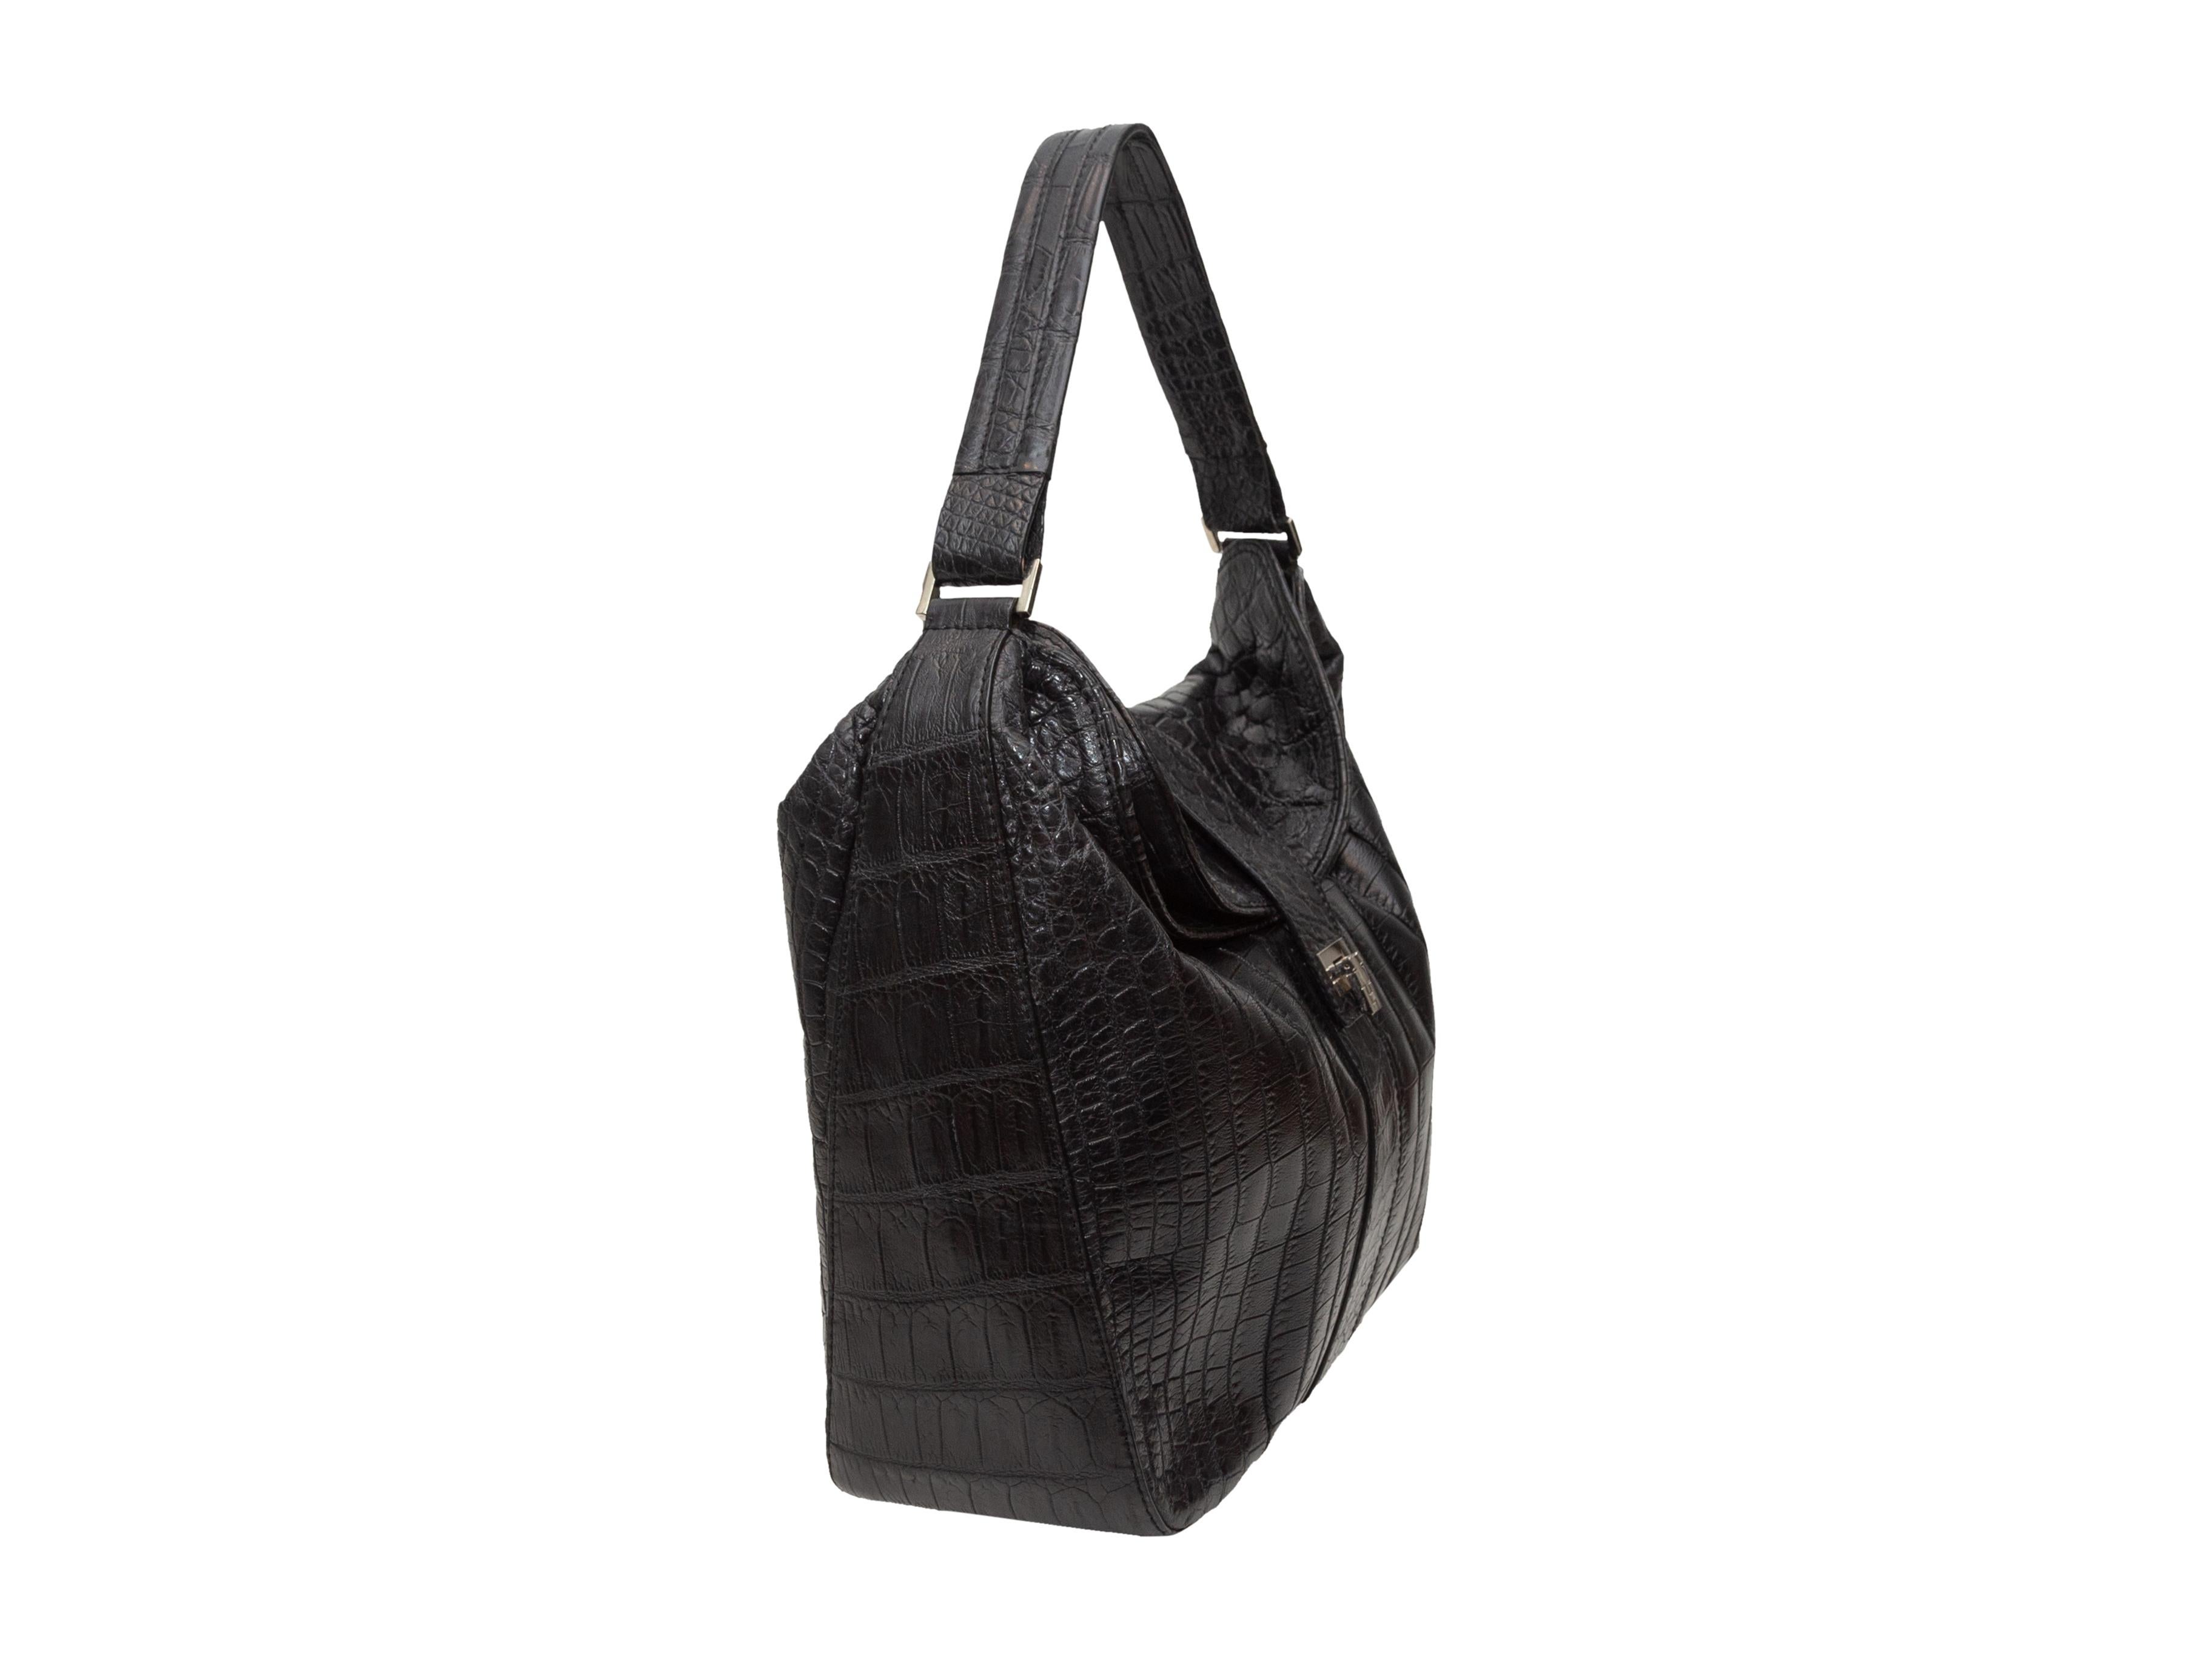 Product details: Black crocodile skin shoulder bag by Lambertson Truex. Silver-tone hardware. Interior zip pocket. Closure at front flap. 12